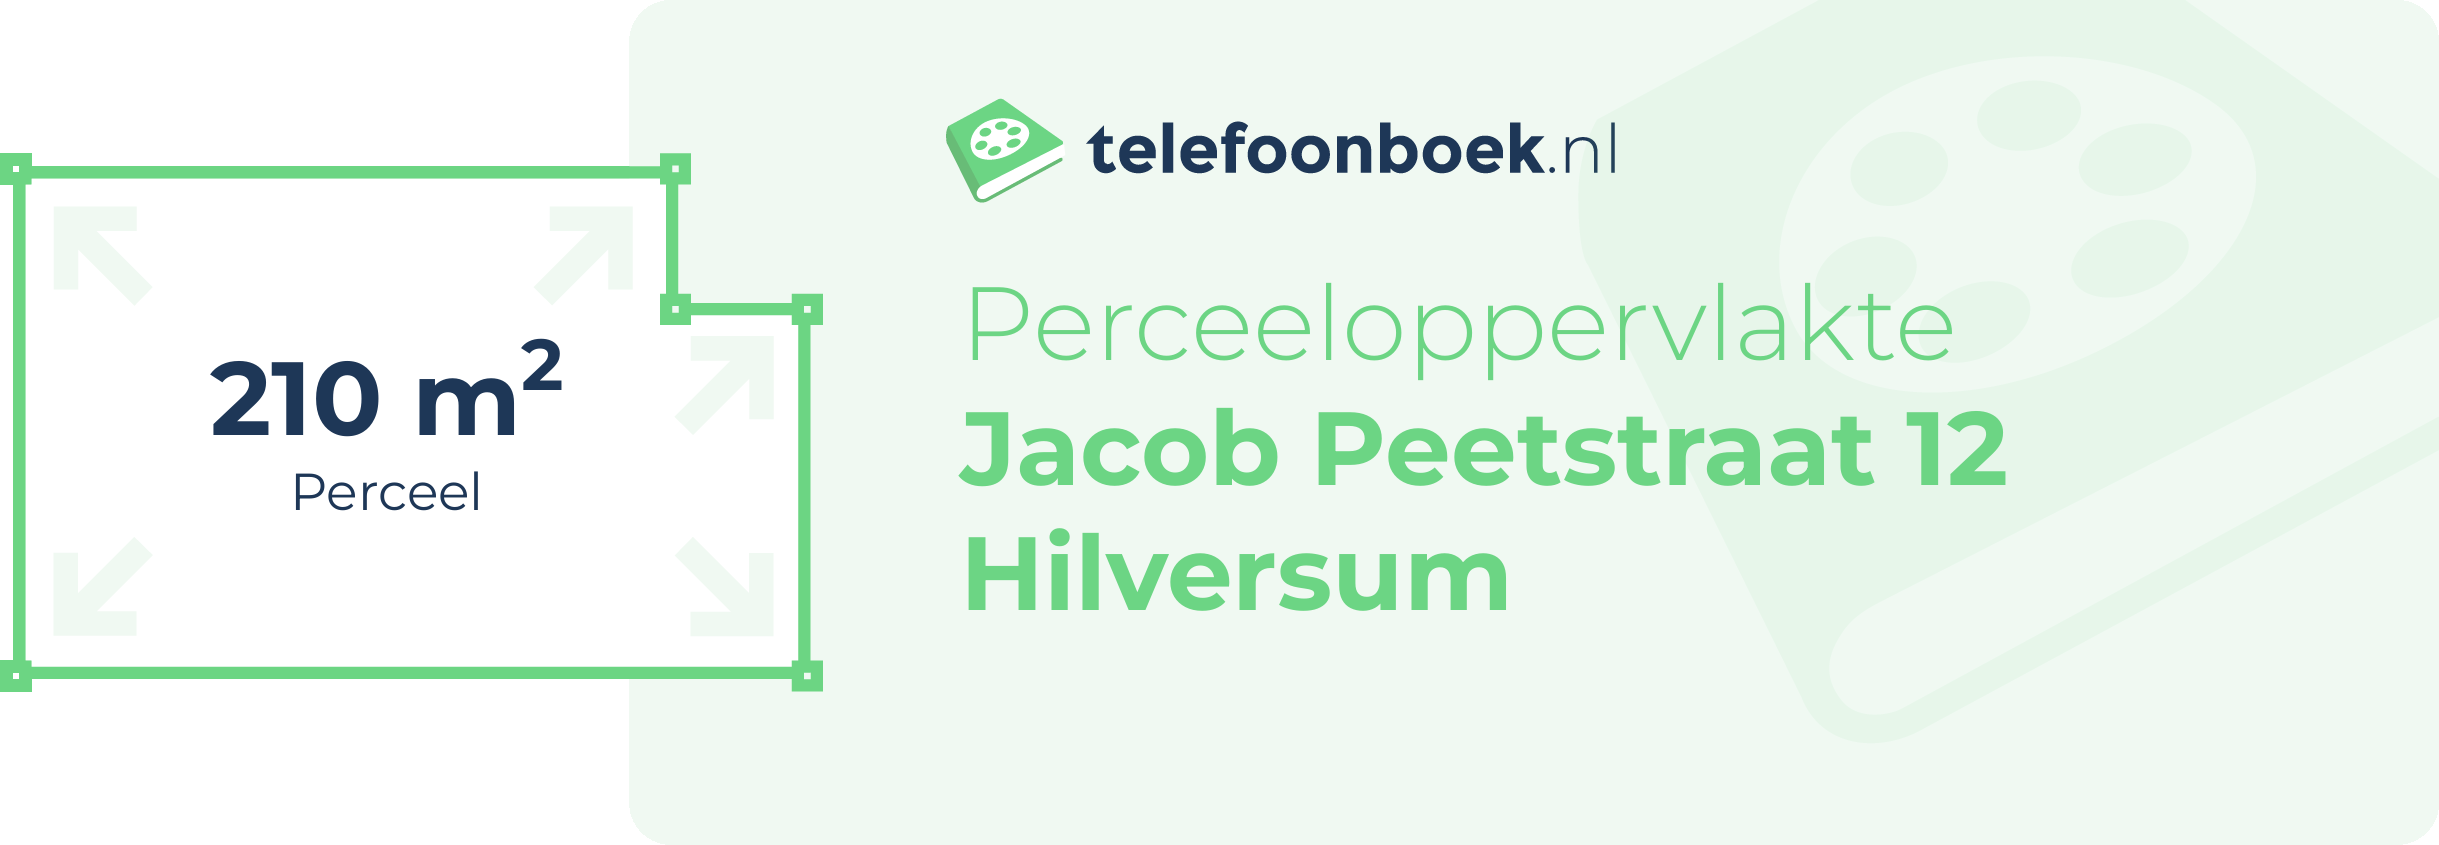 Perceeloppervlakte Jacob Peetstraat 12 Hilversum